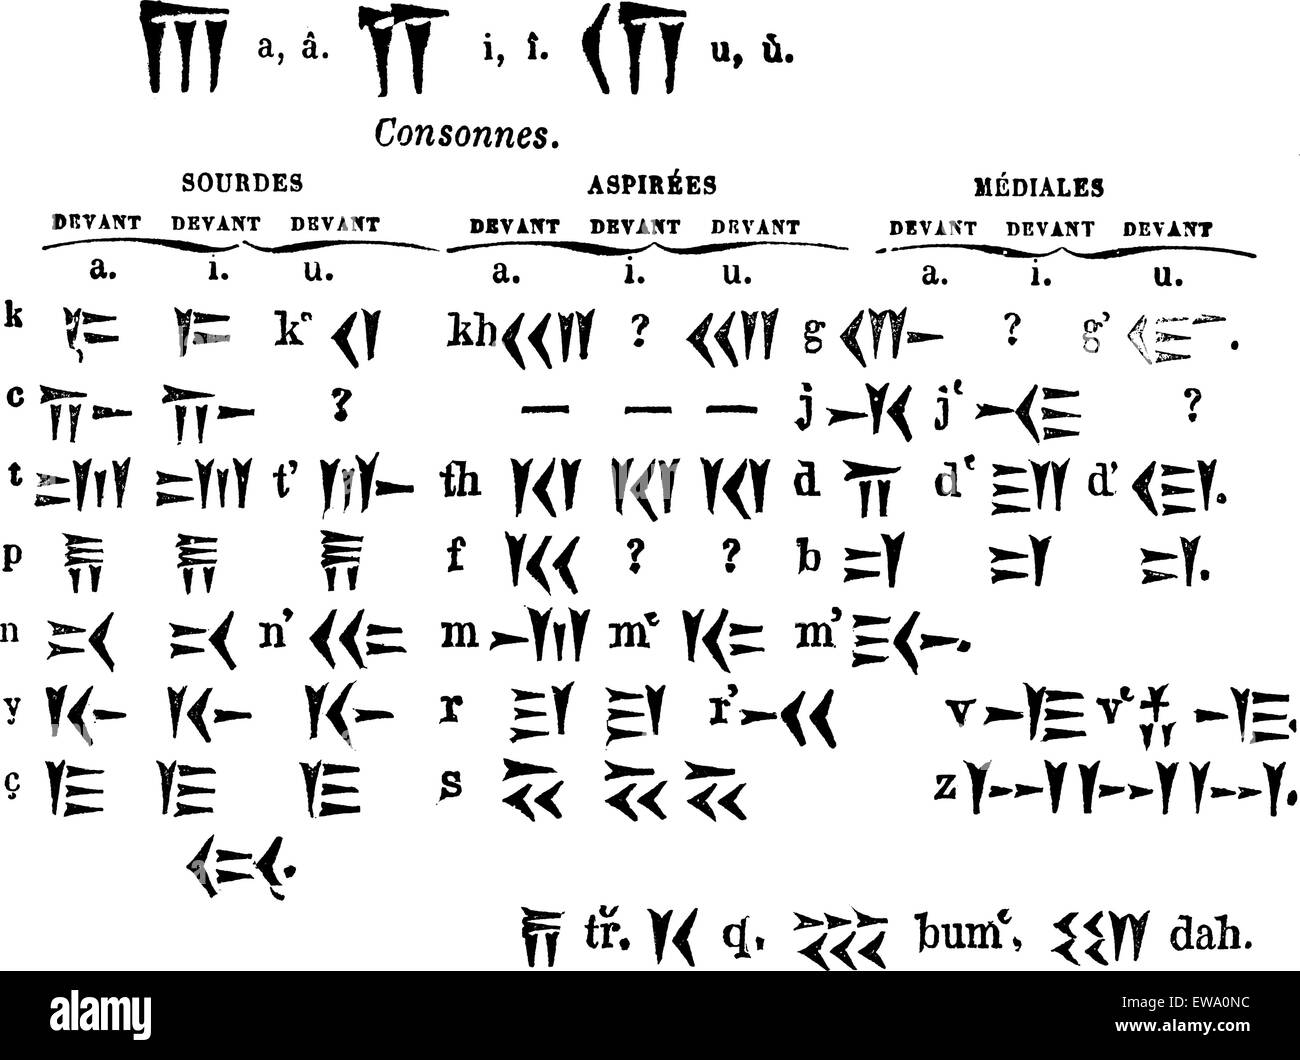 Script cuneiforme, vintage illustrazioni incise. Trousset enciclopedia (1886 - 1891). Illustrazione Vettoriale